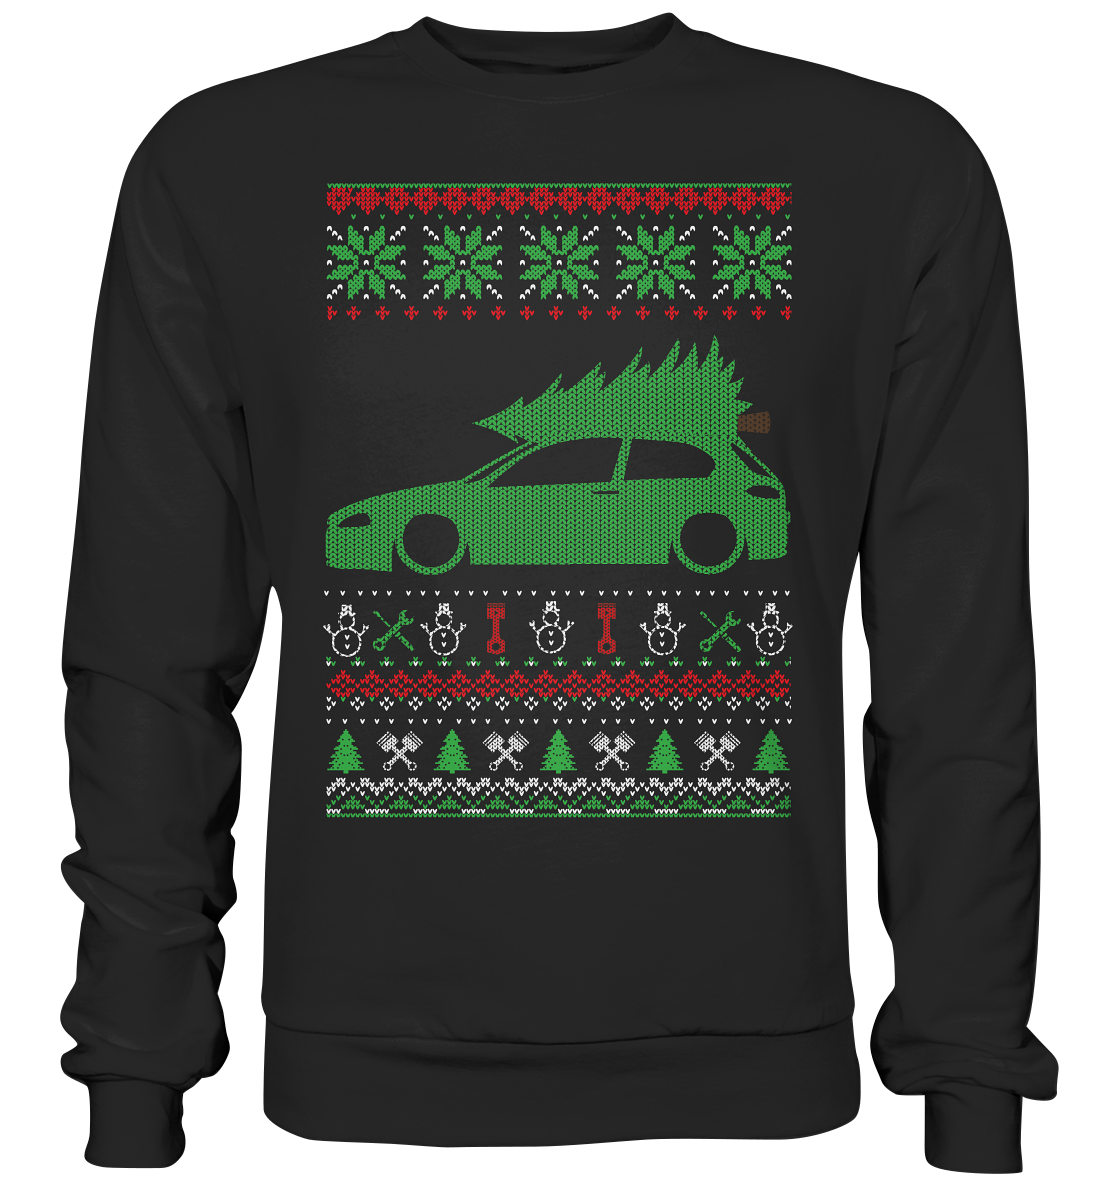 CODUGLY_ARGK147 - Premium Sweatshirt